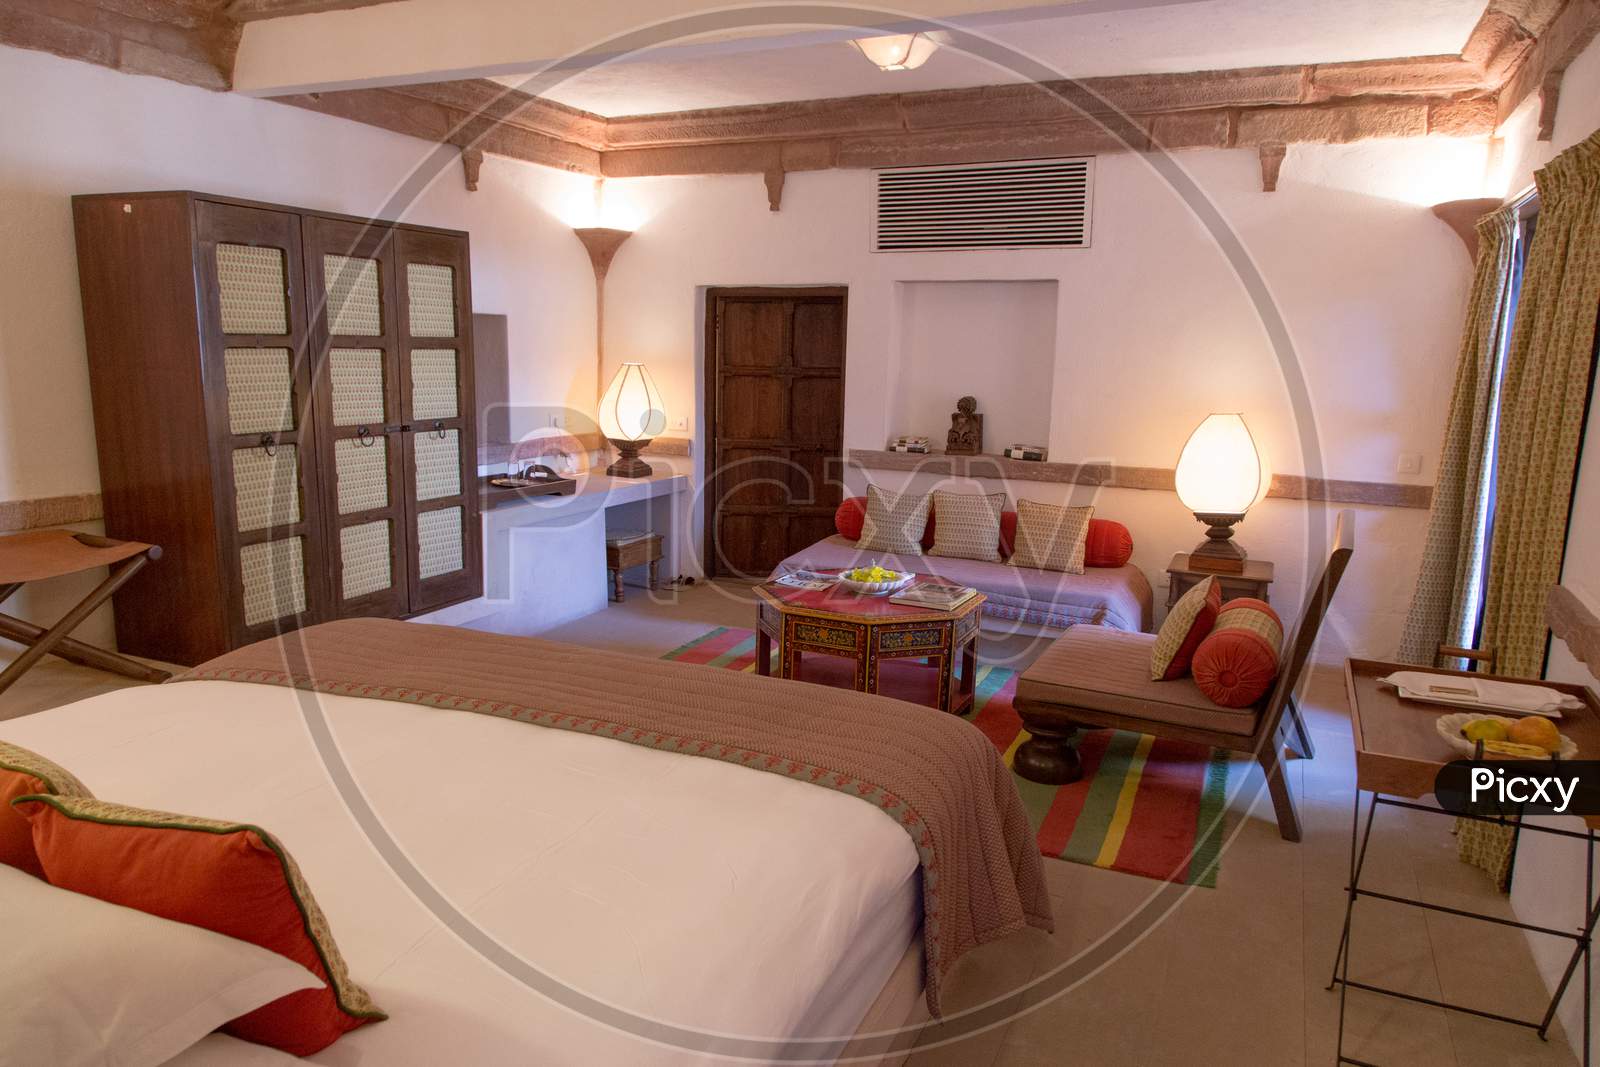 Ranvas hotel, Nagaur Fort, Rajasthan, India